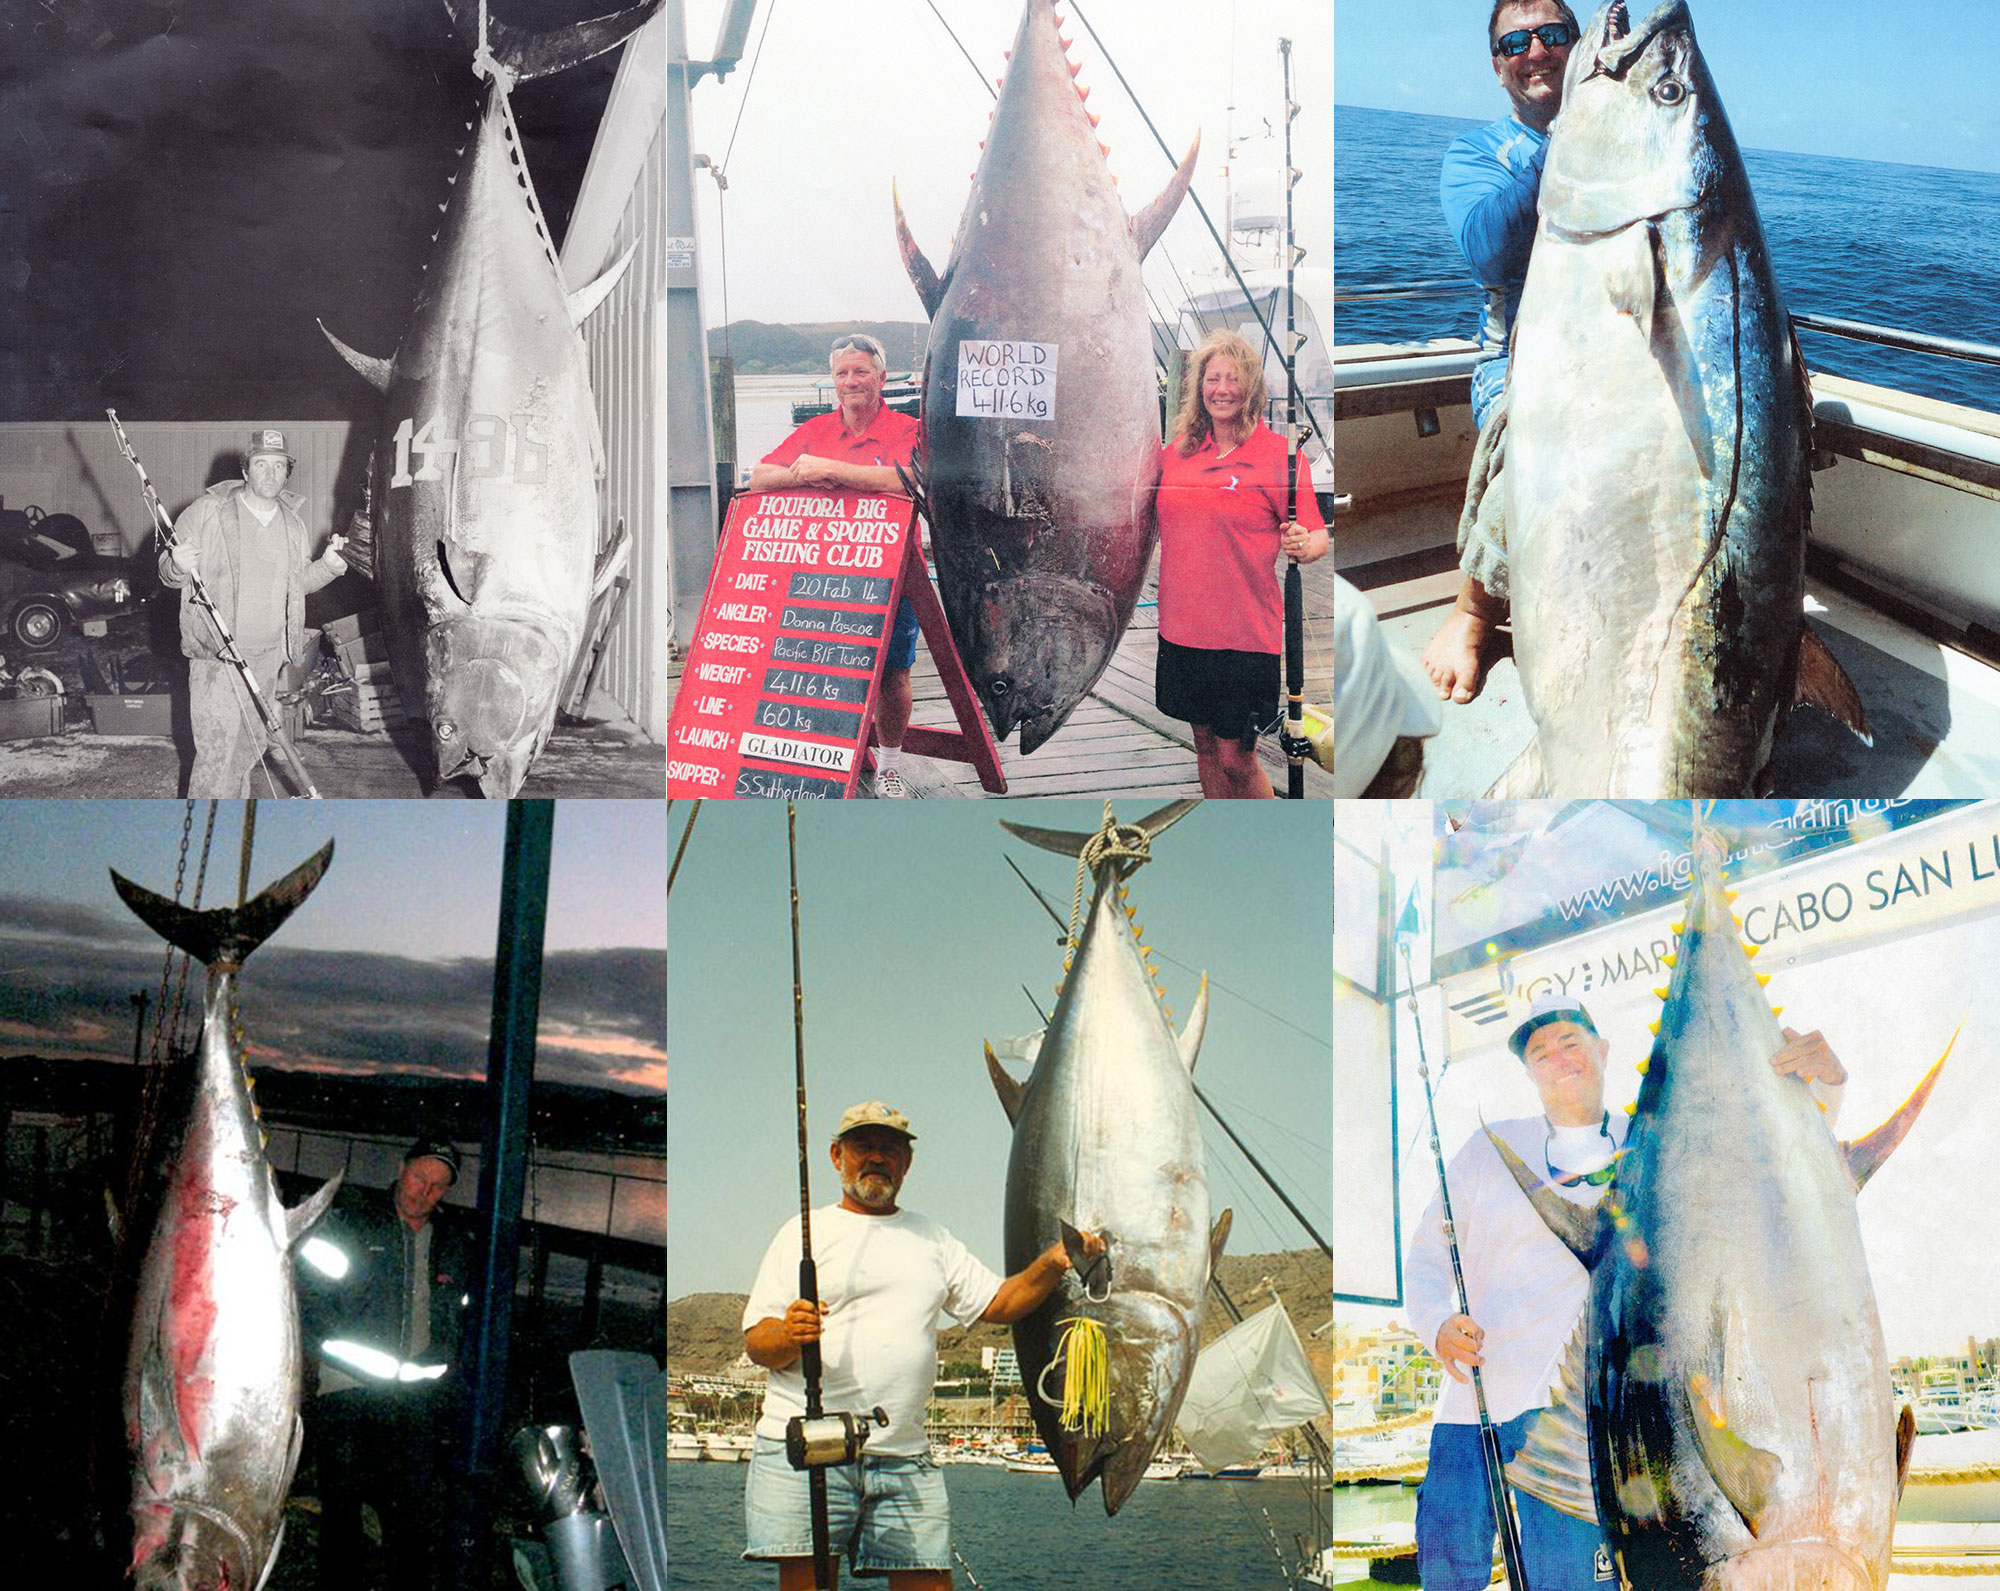 Tuna Fishing, How to Catch Yellowfin, Bluefin & Blackfin Tuna